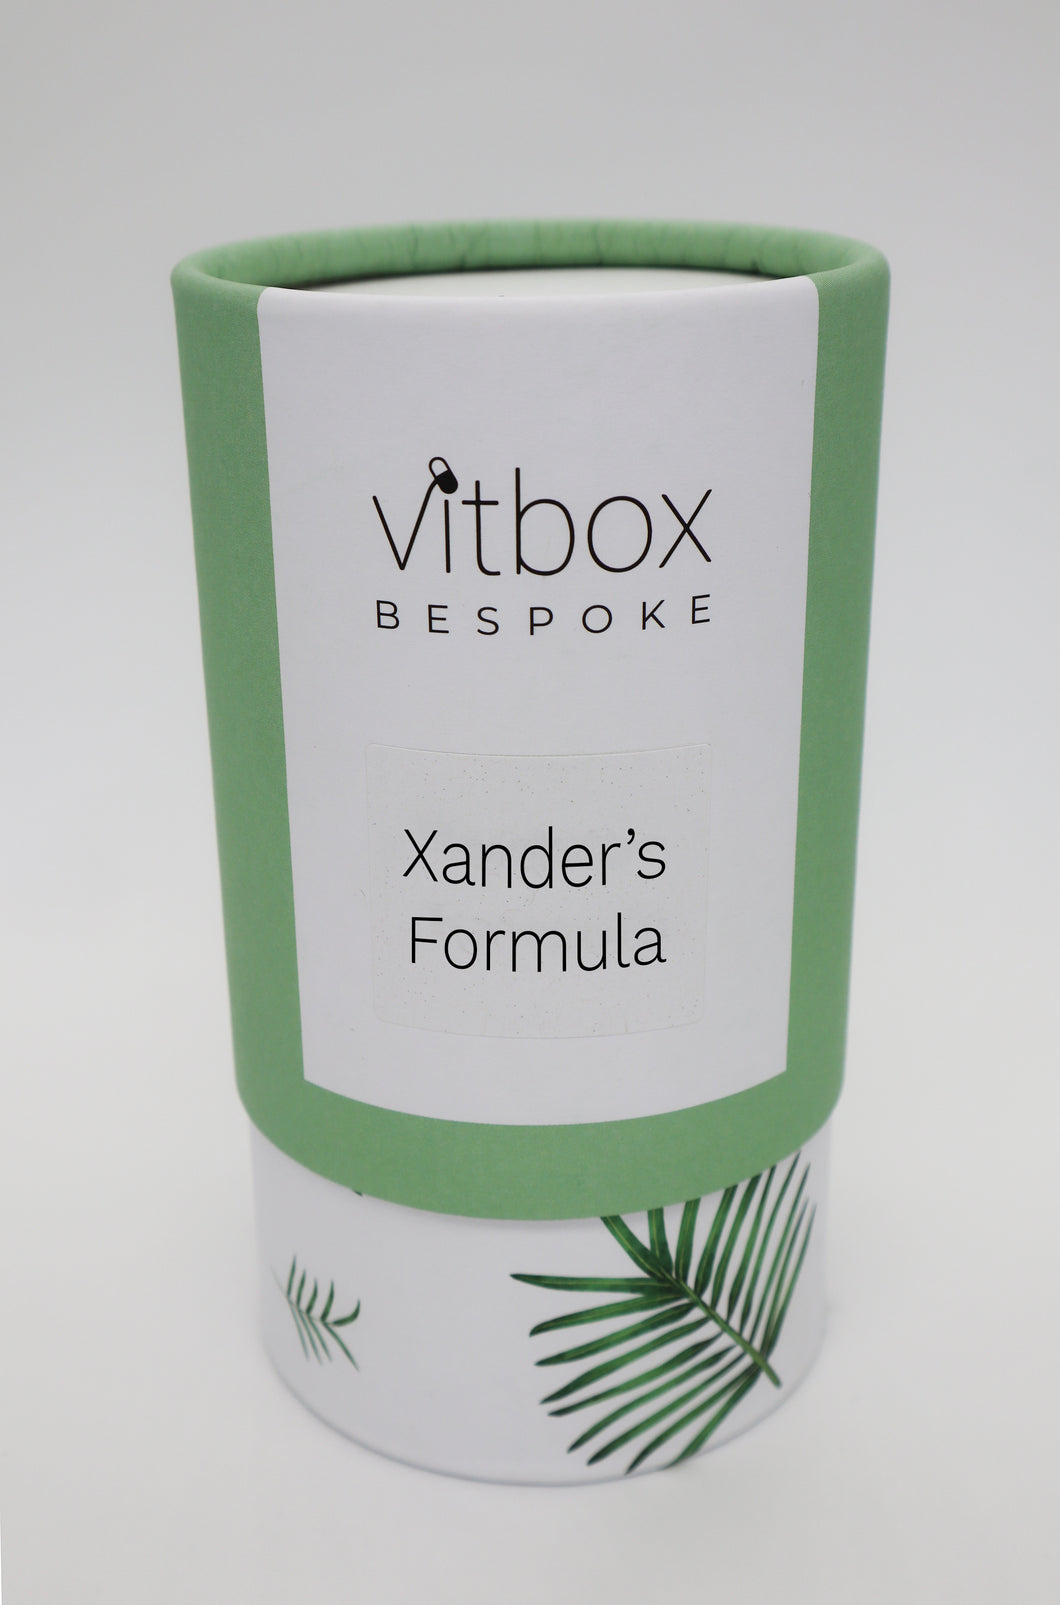 Xander's Vitbox Bespoke